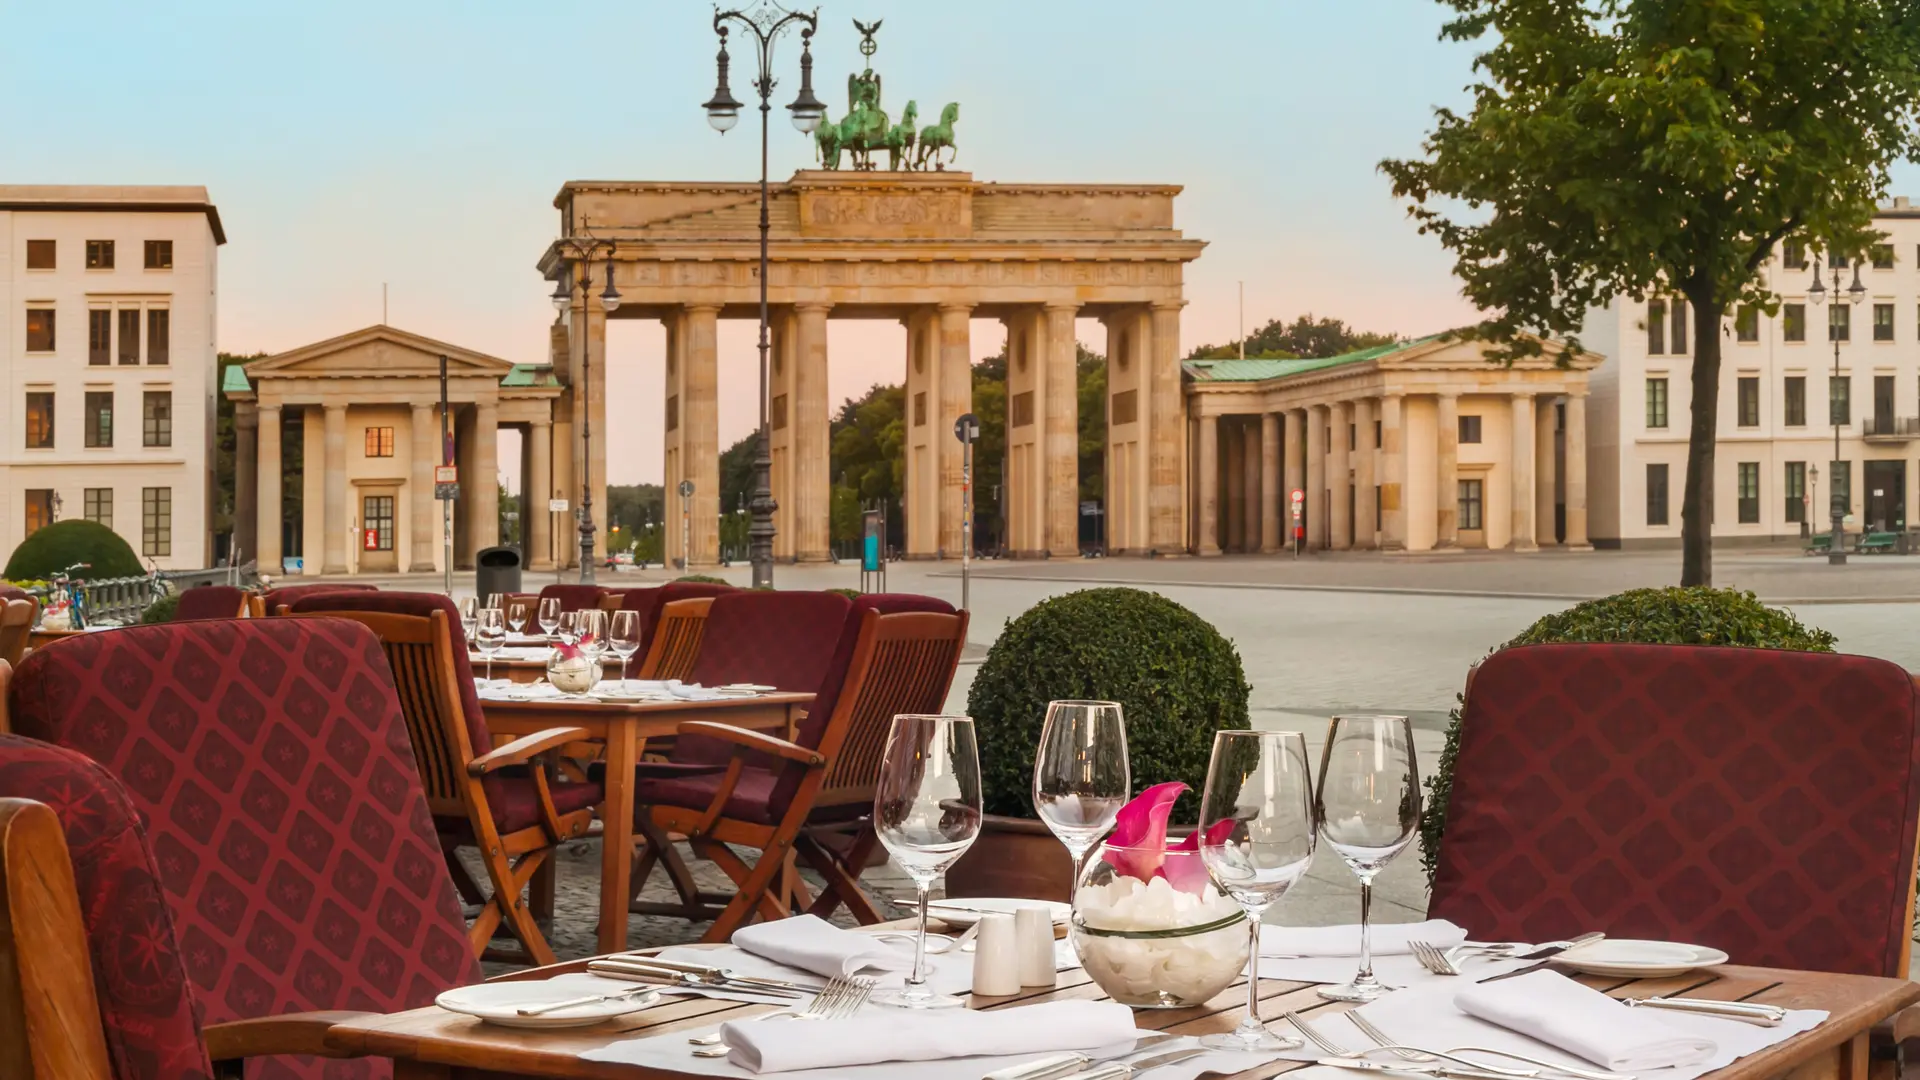 Hotel review Restaurants & Bars' - Hotel Adlon Kempinski Berlin - 5